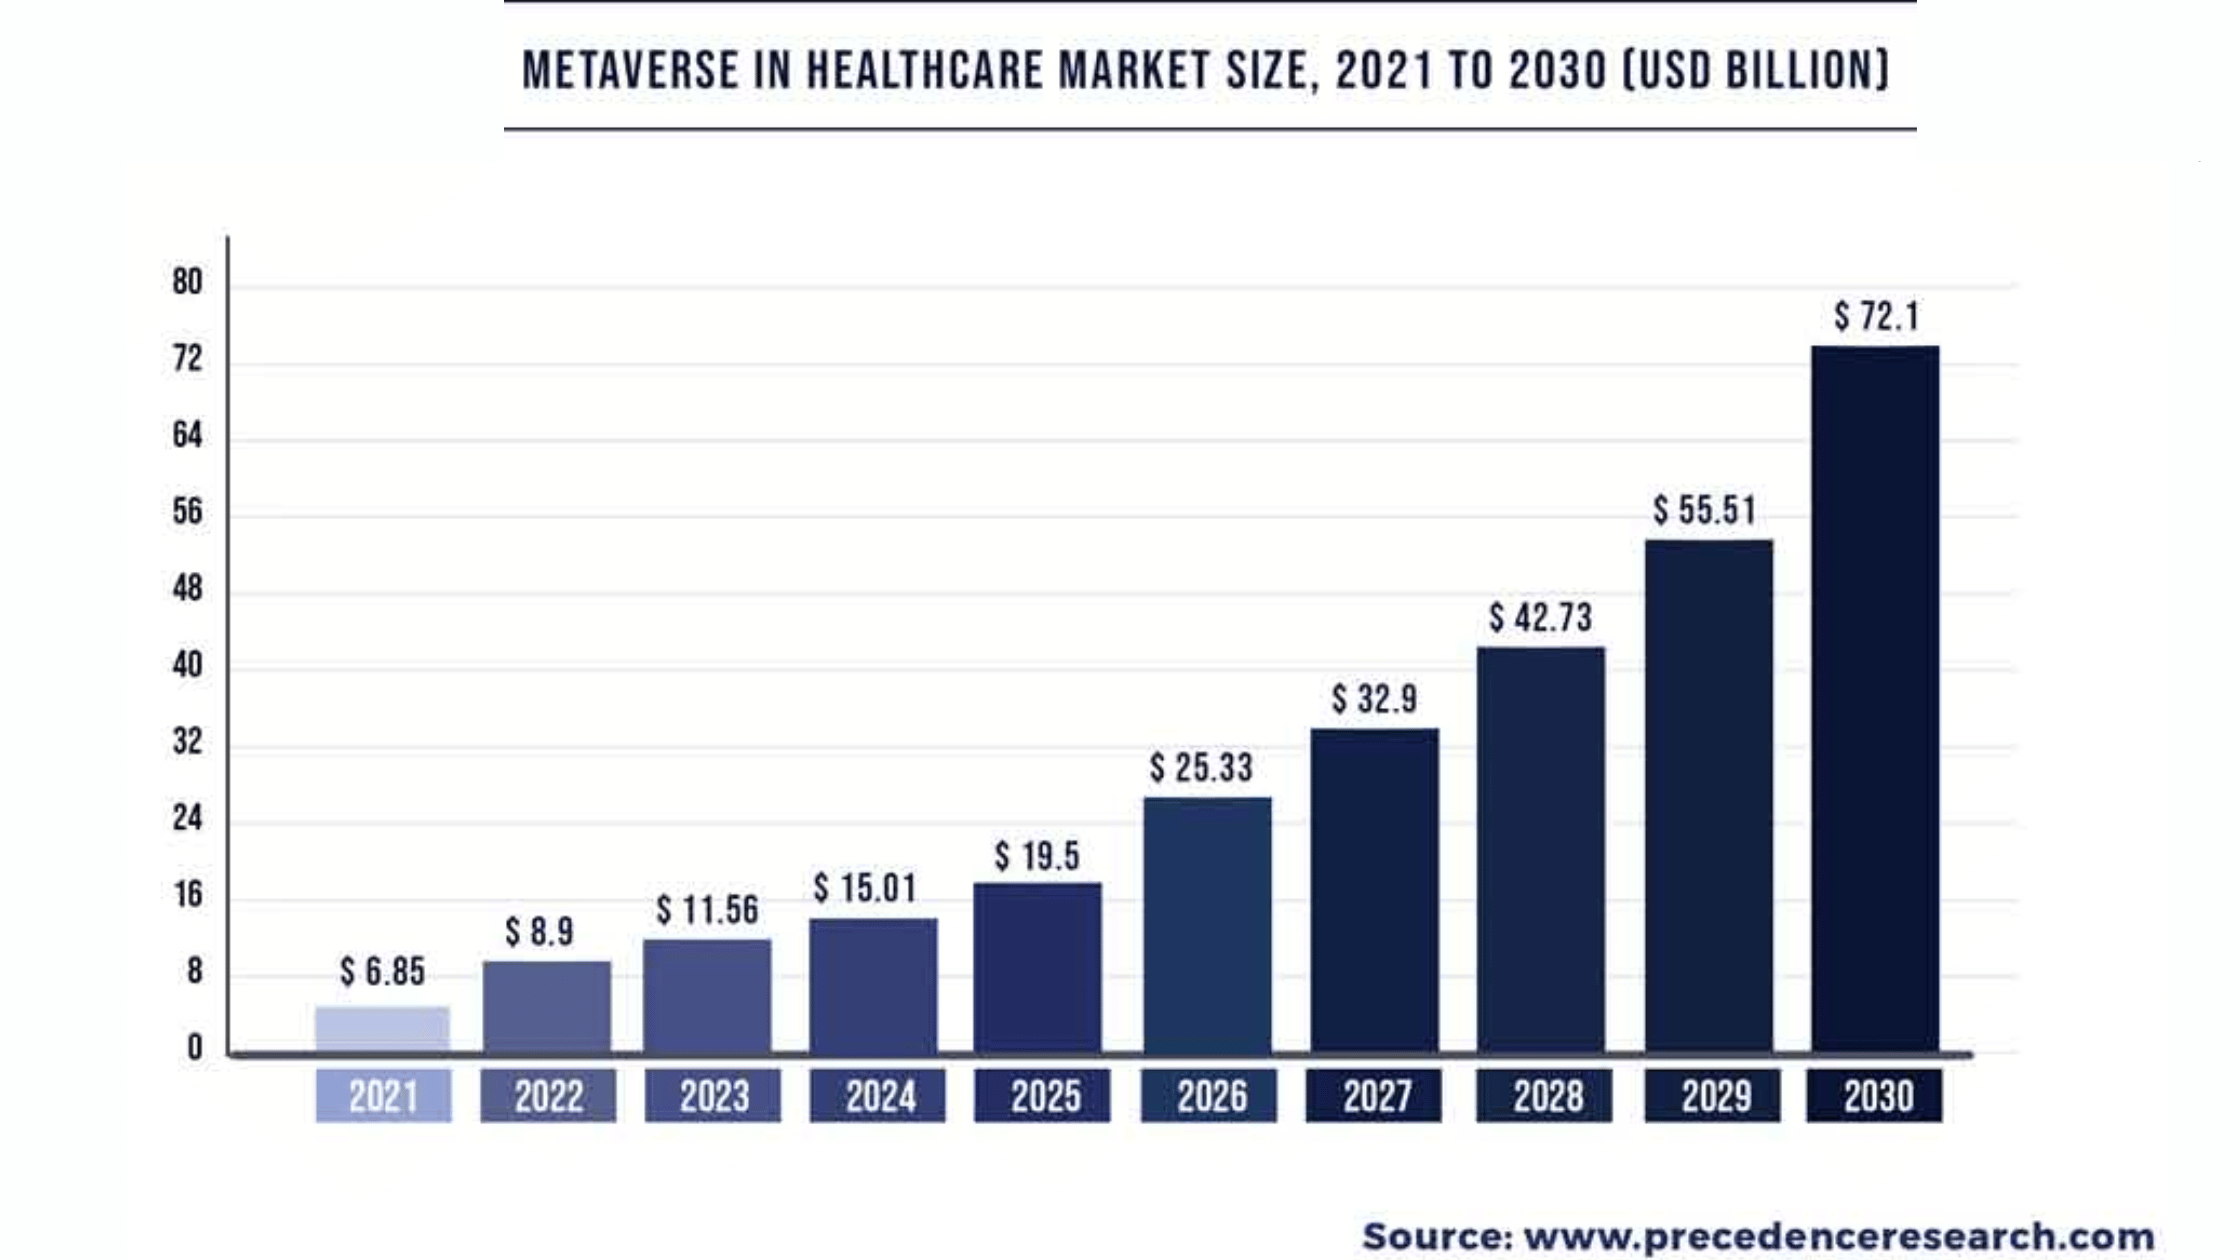 Metaverse Impact On Healthcare